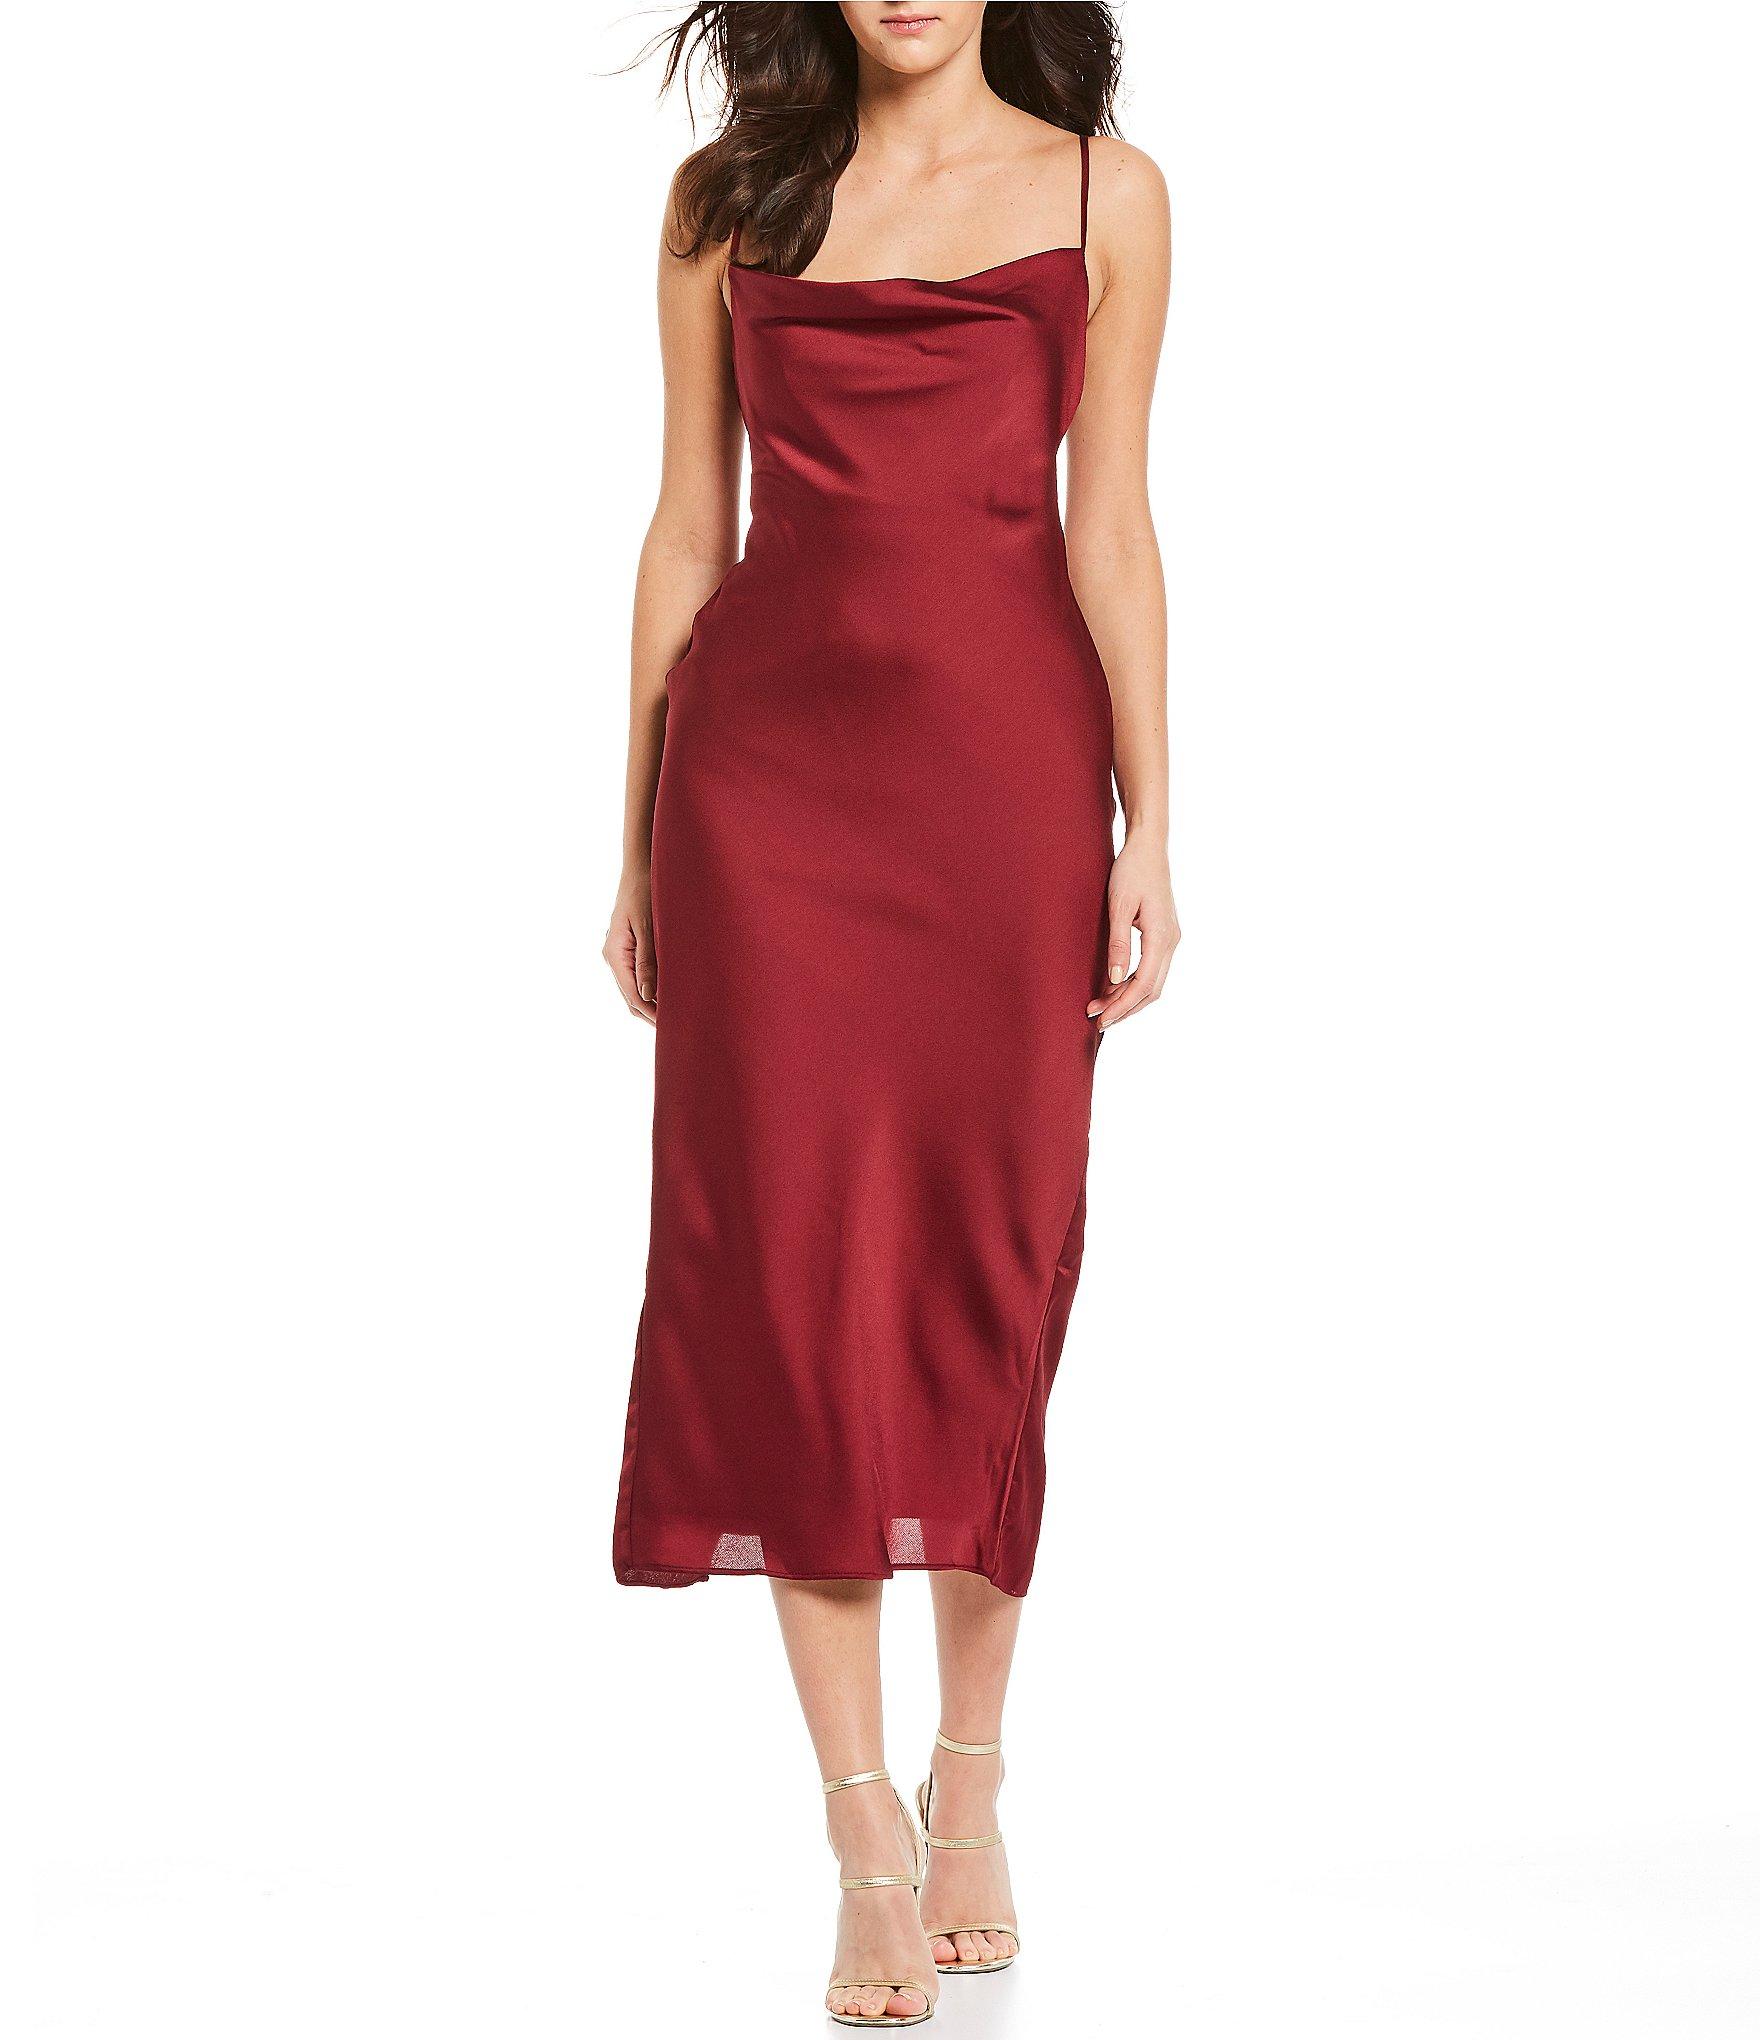 designsby182: Satin Spaghetti Strap Dress